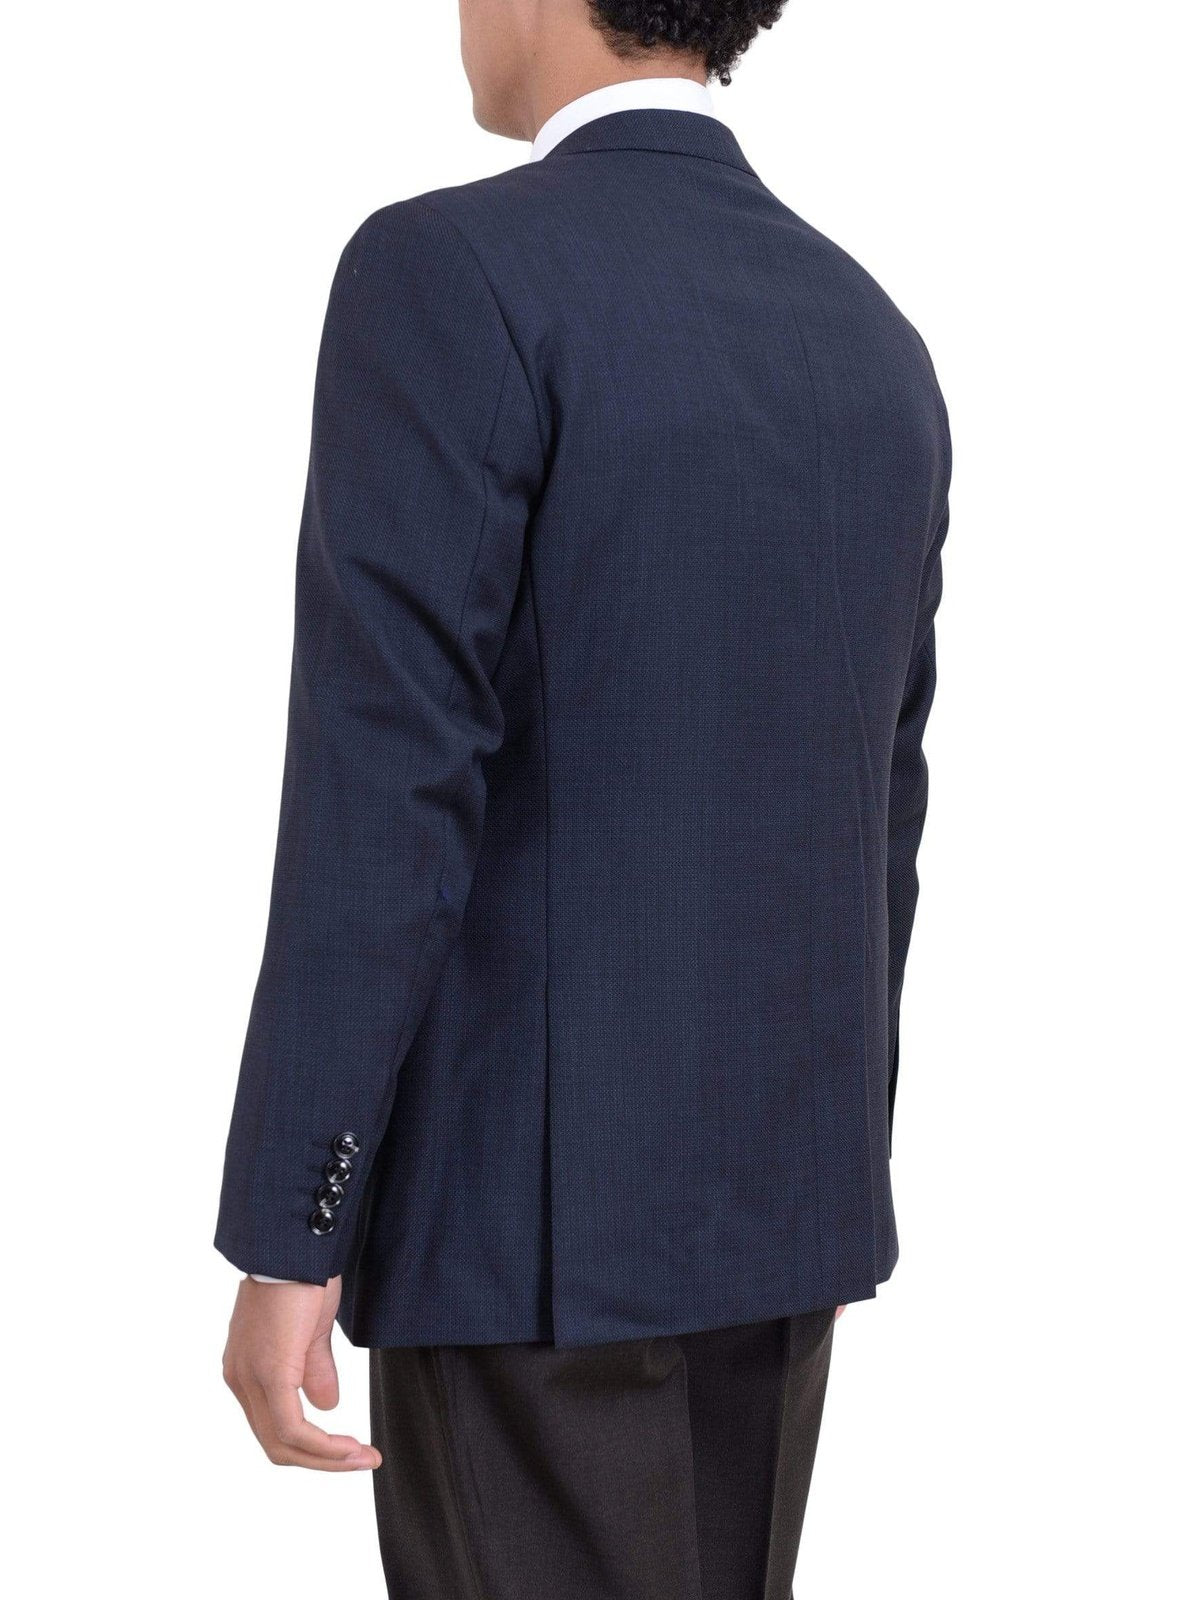 Arthur Black BLAZERS Arthur Black Classic Fit Navy Hopsack Weave Two Button Wool Blazer Sportcoat